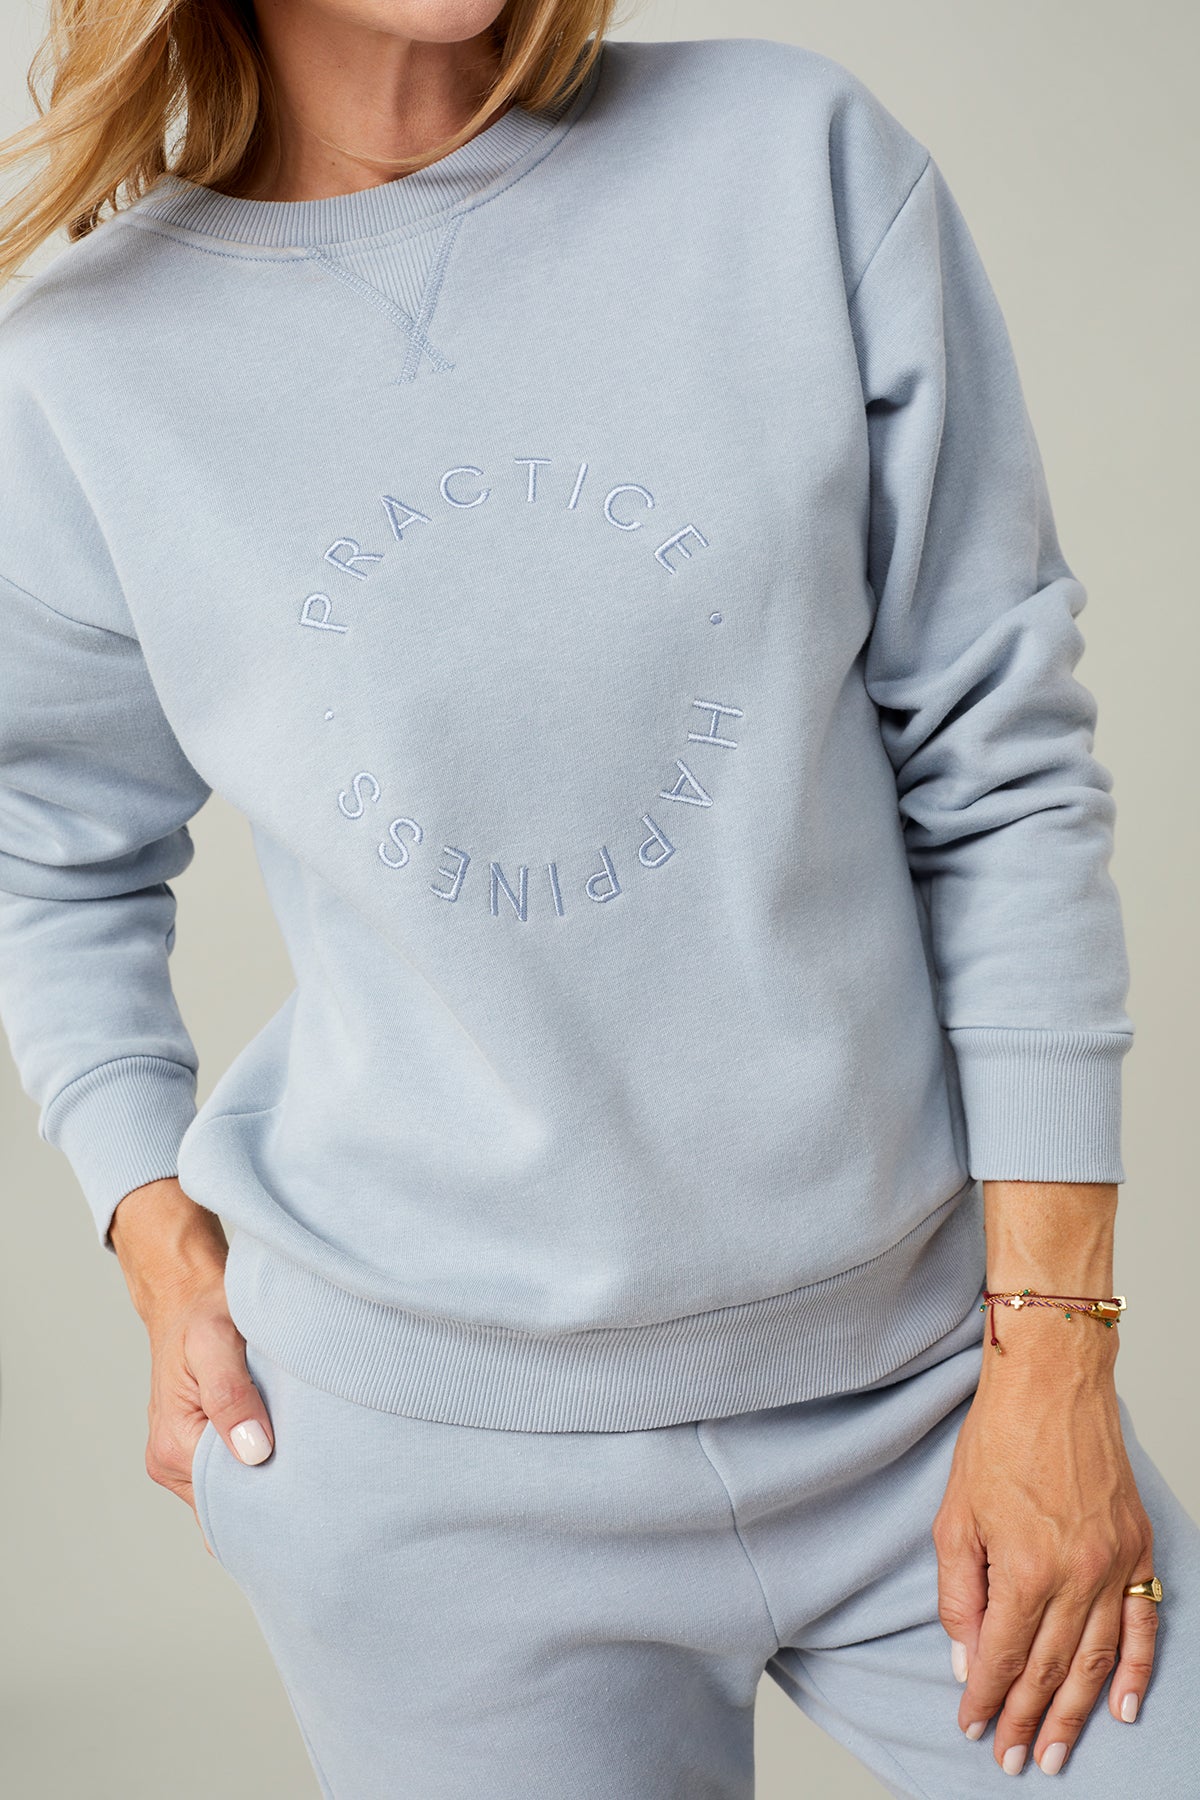 Mandala Yoga Pullover Grau Front - Practice Happiness Sweater